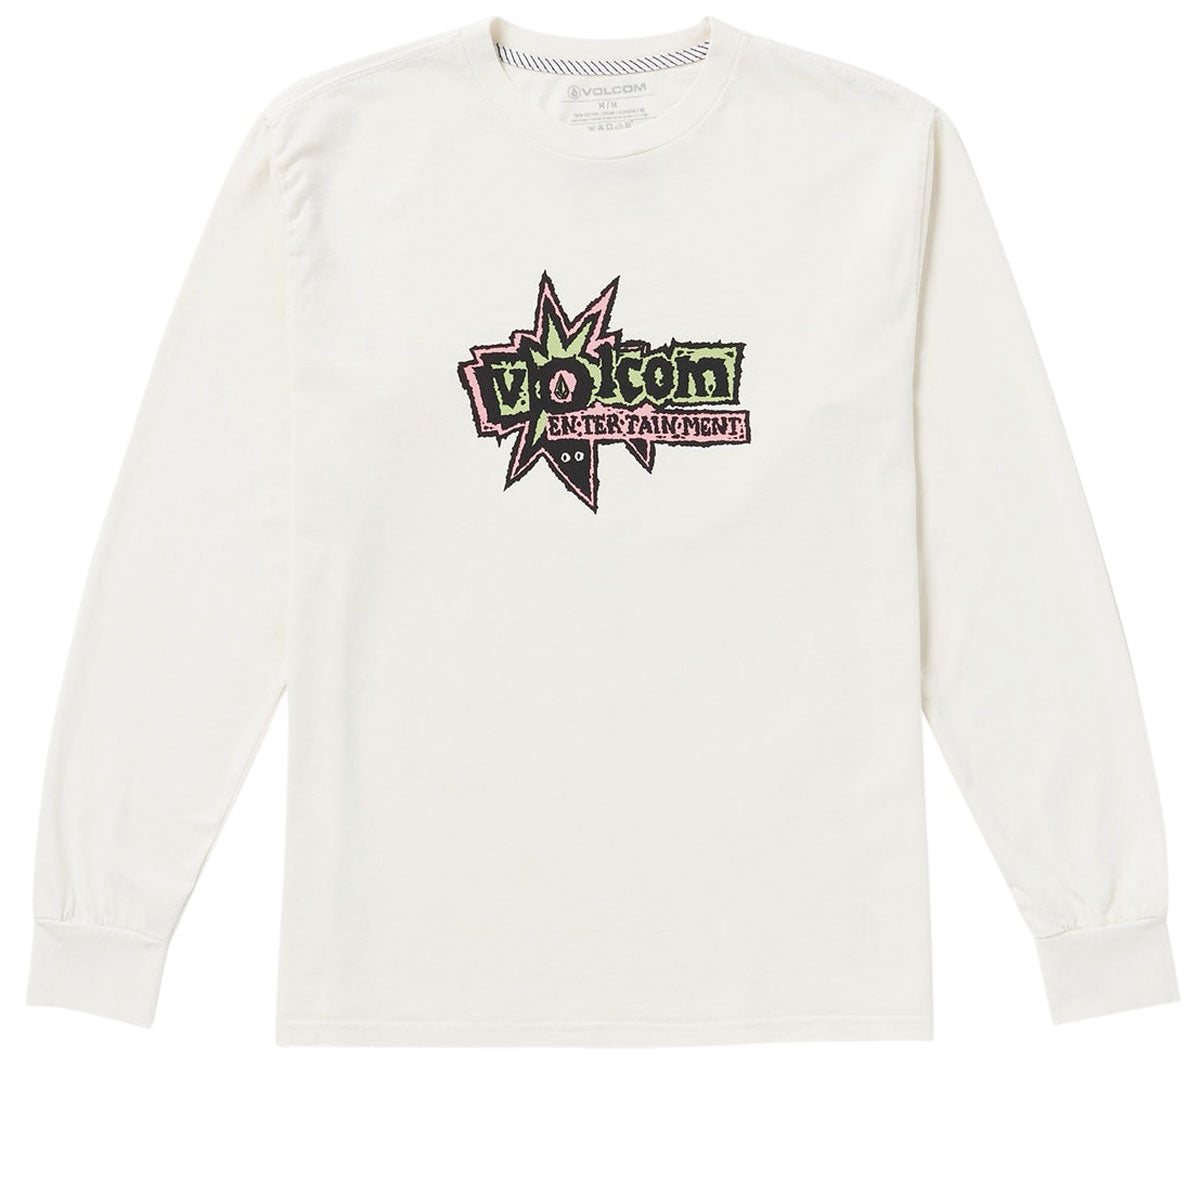 Volcom V Ent Fat Tony Long Sleeve T-Shirt - Off White image 1